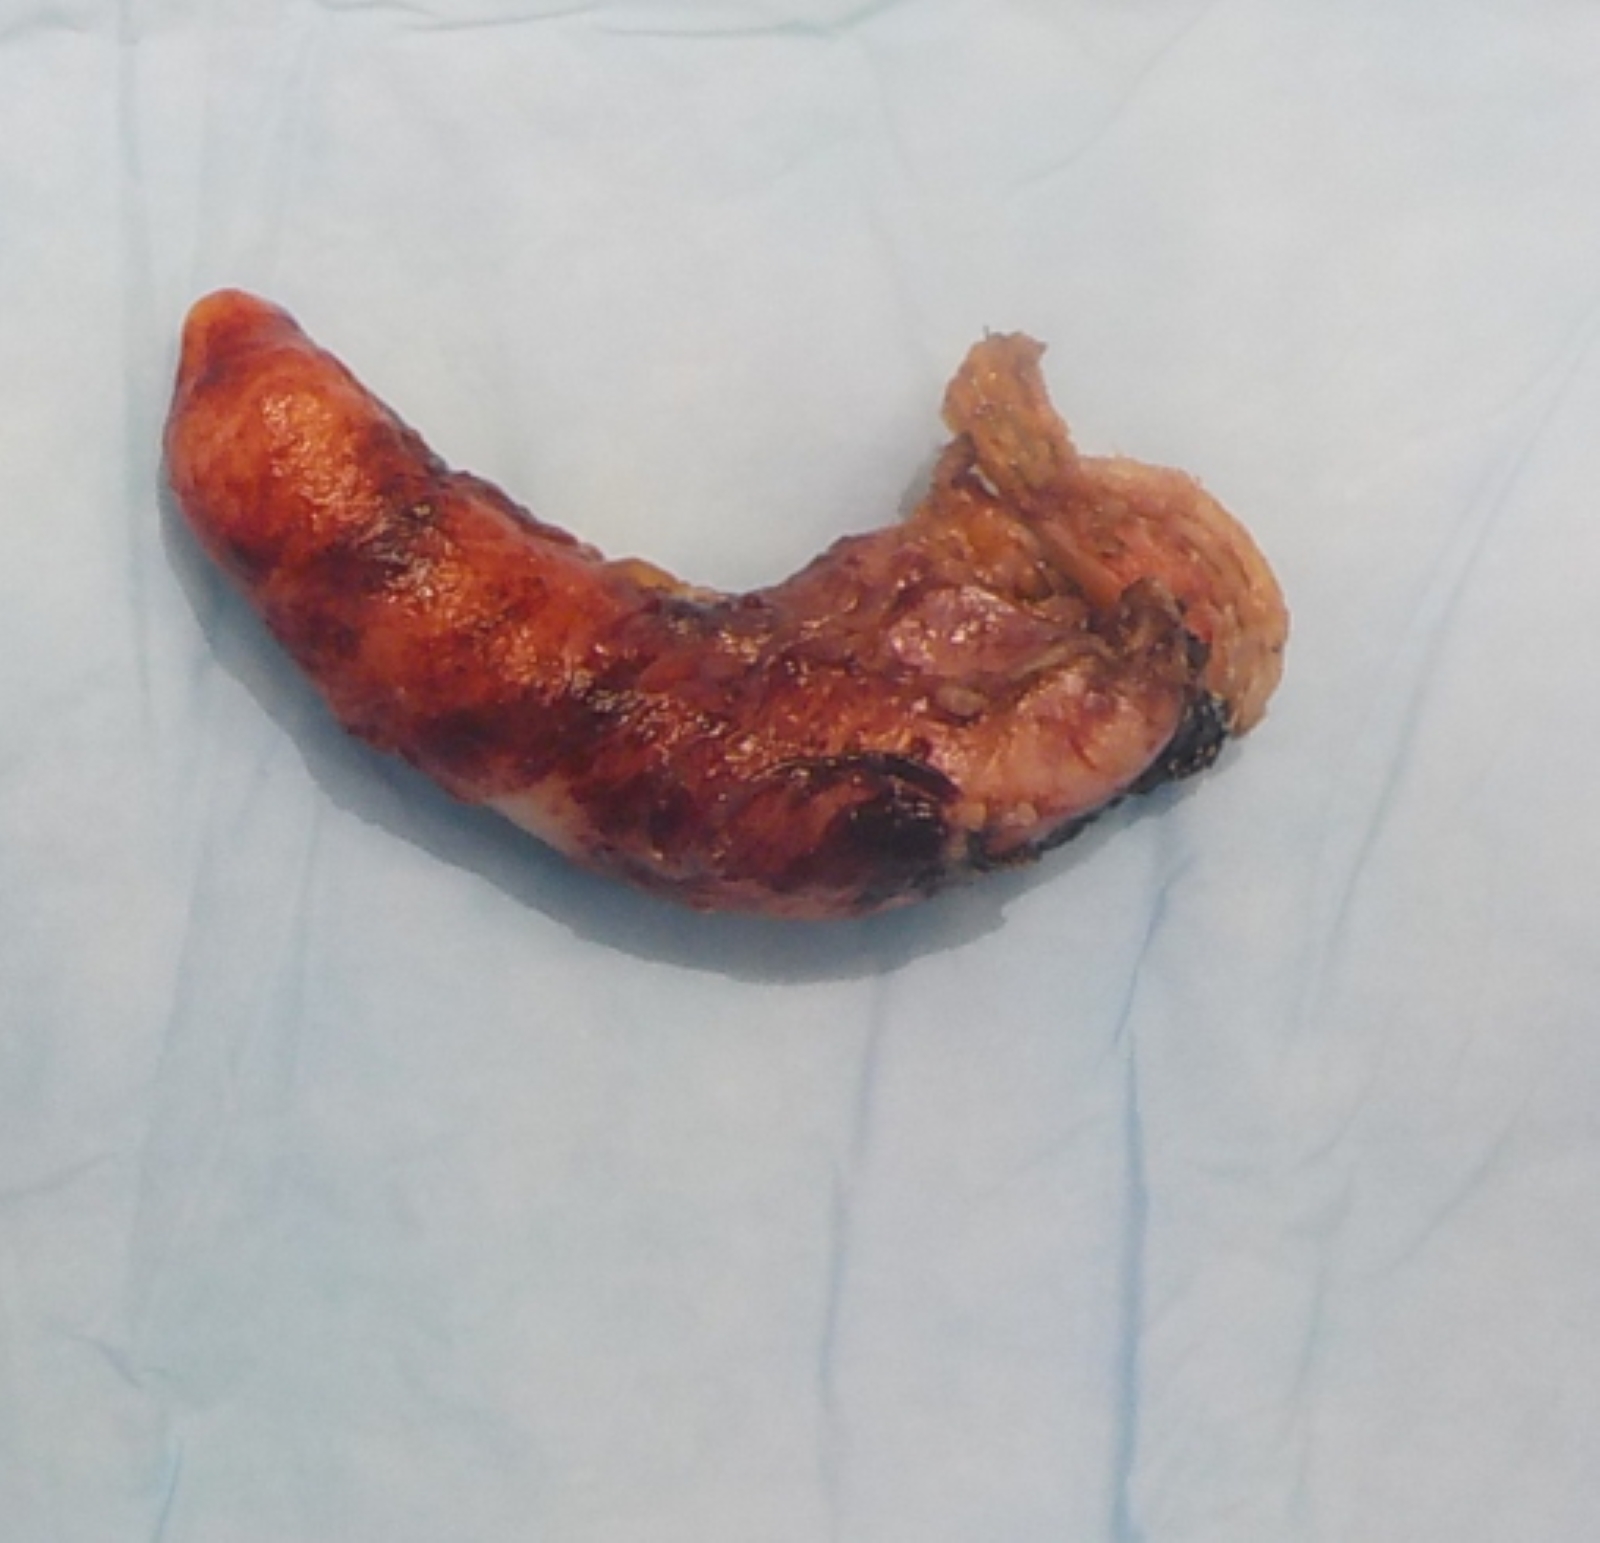 Mildly enlarged appendix